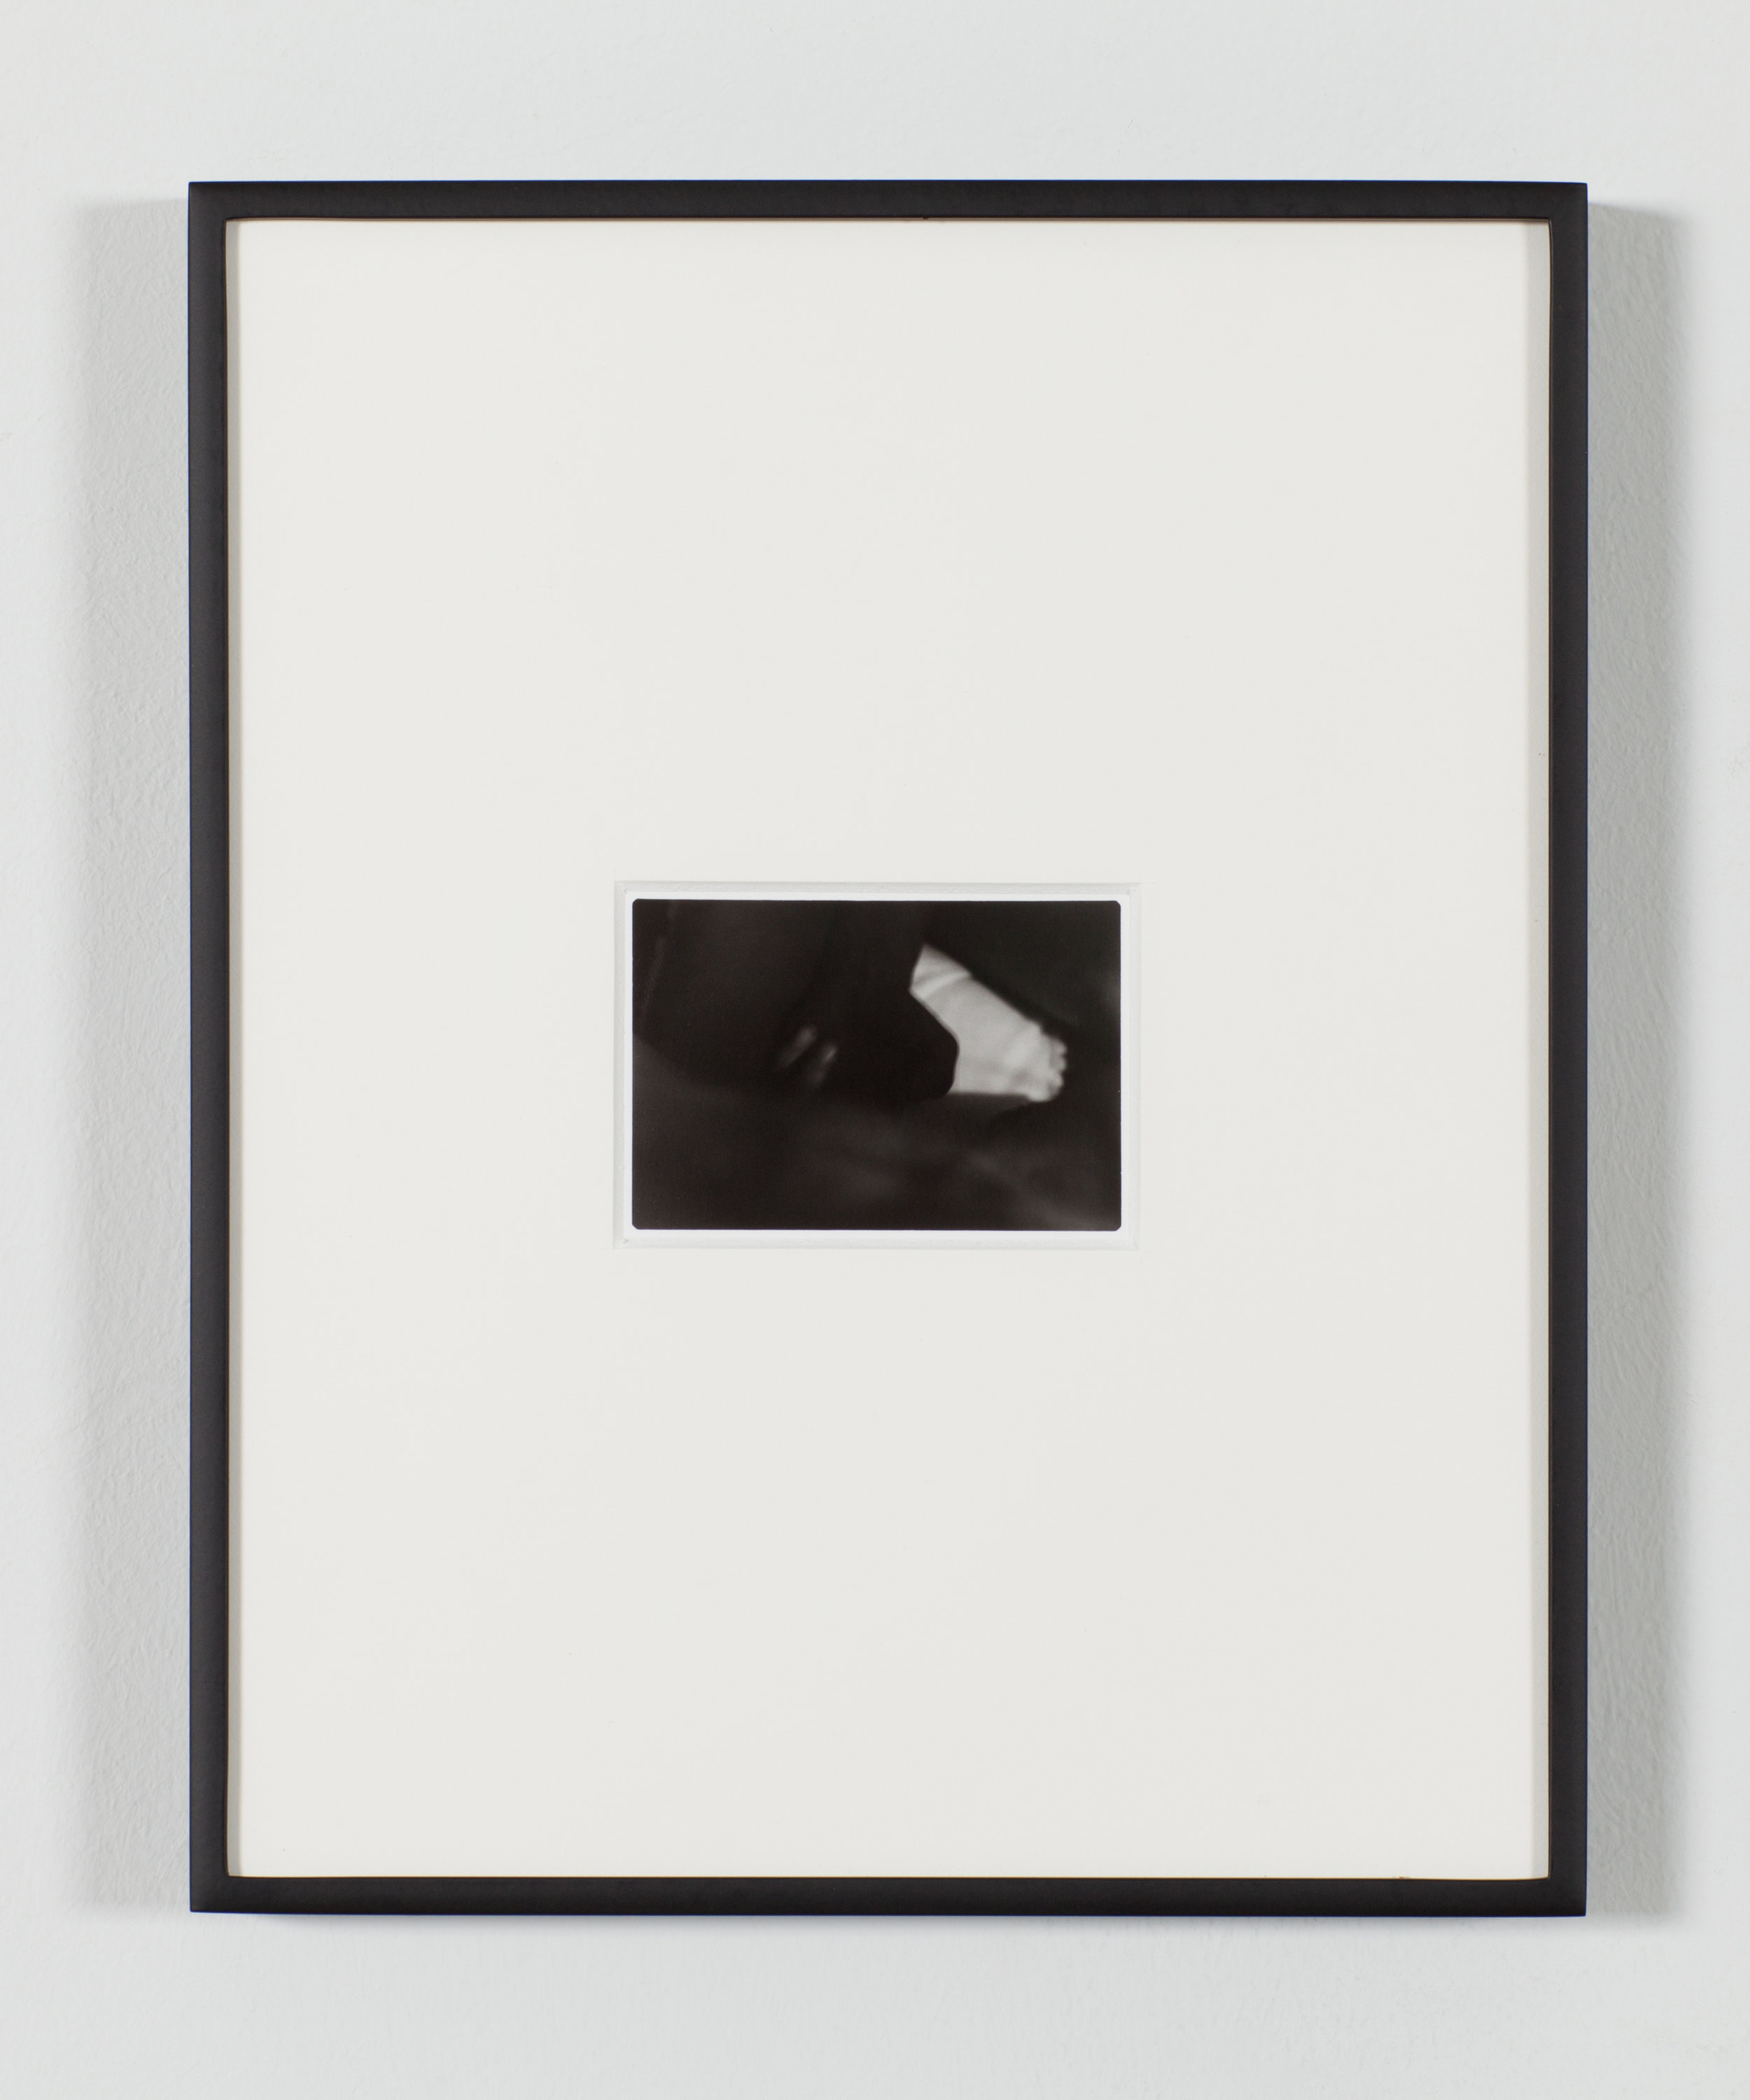  Untitled (Hand), 2019 Gelatin Silver Print 2.7x1.8" in 8x10" Aluminum Frame 